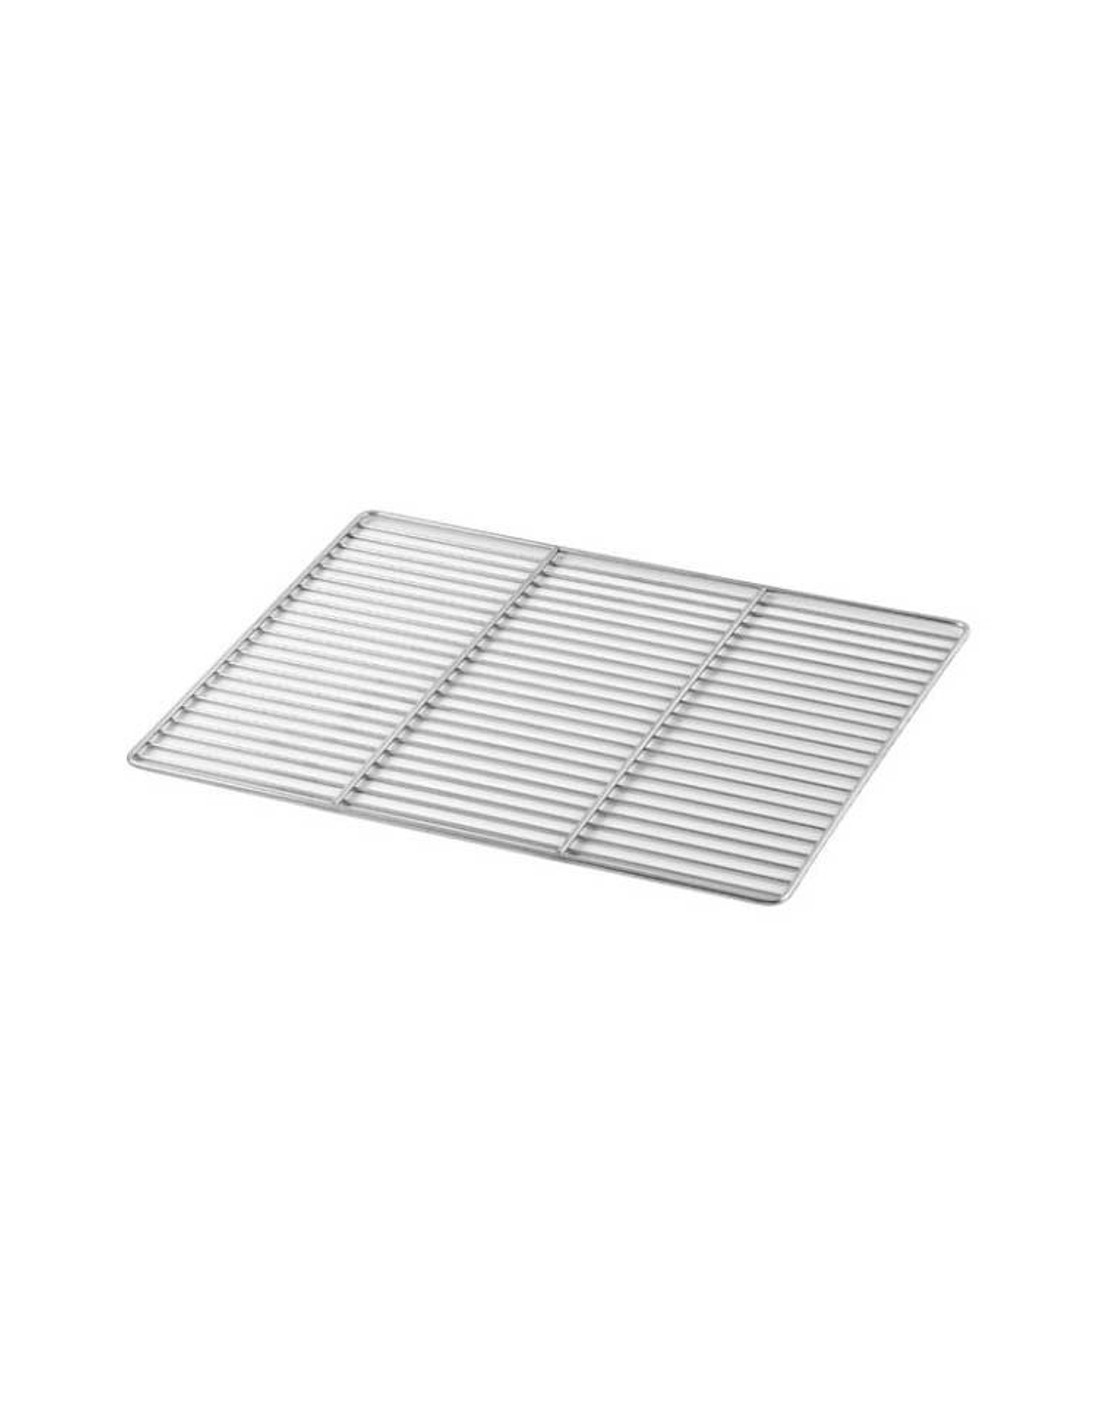 Plasticized grid - Cm 65 x 52